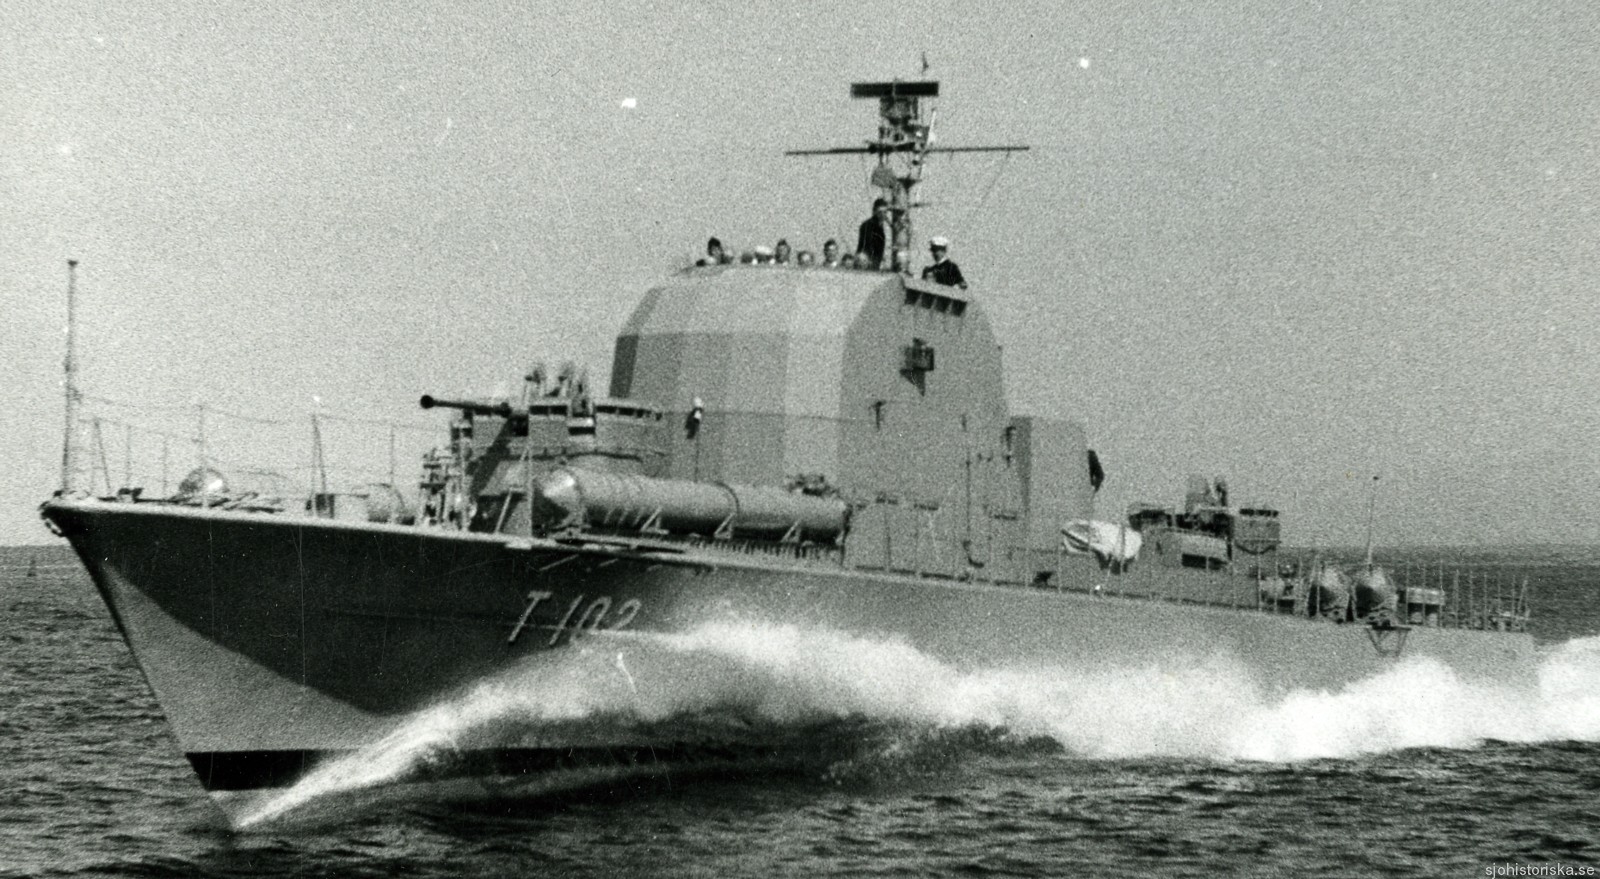 t102 plejad hms hswms class fast attack craft torpedo boat vessel swedish navy svenska marinen 09